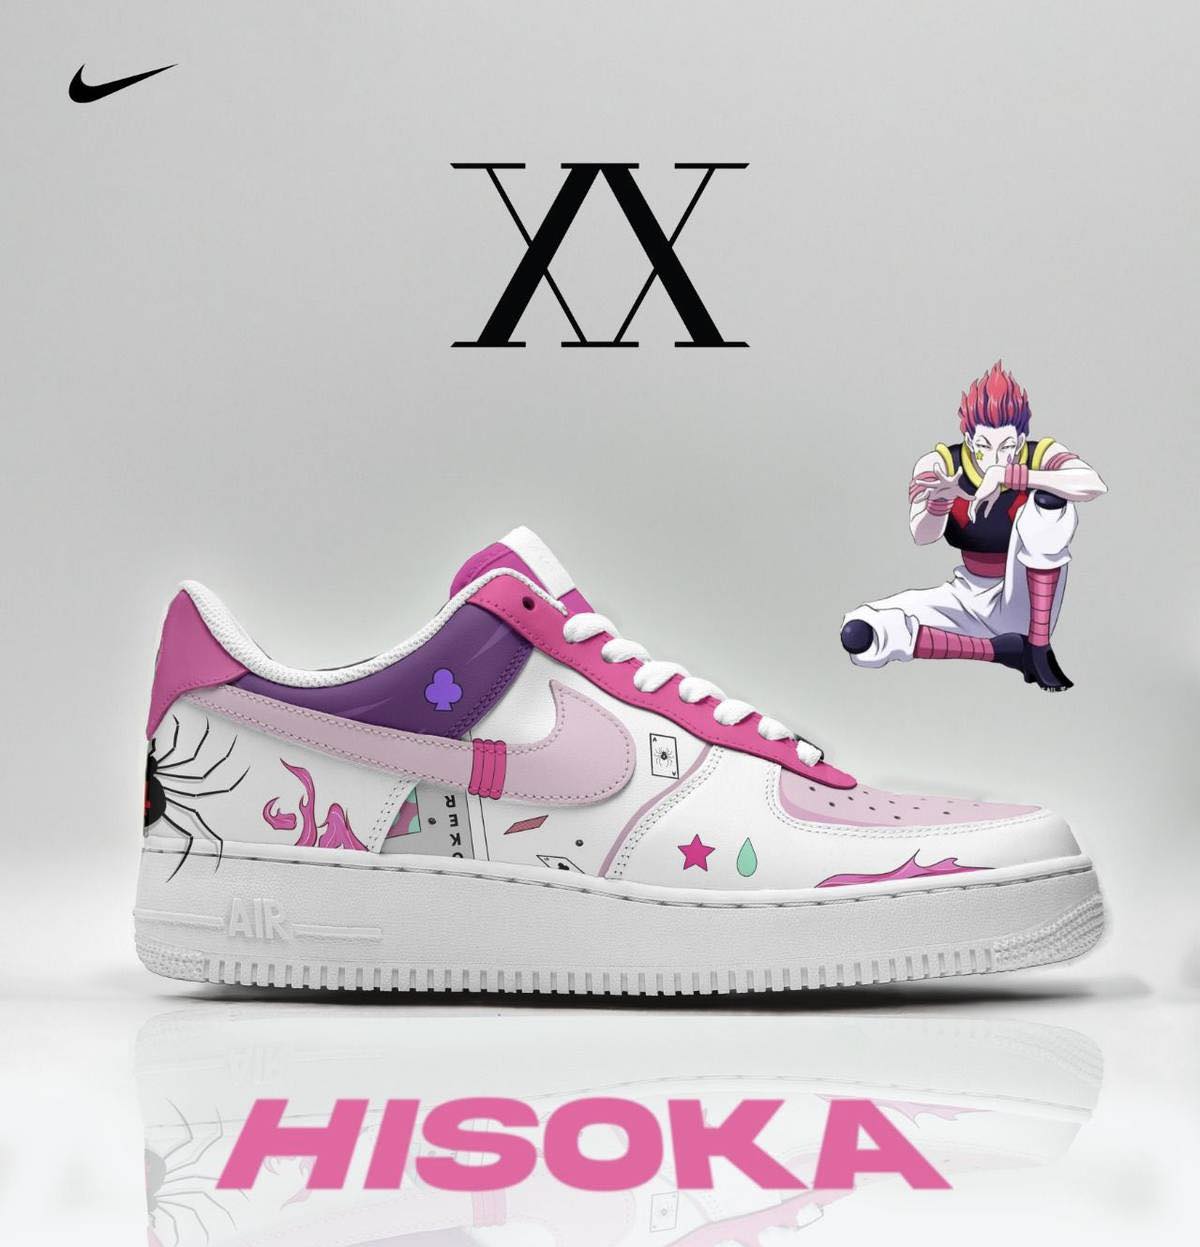 HxH x Nike original high quality